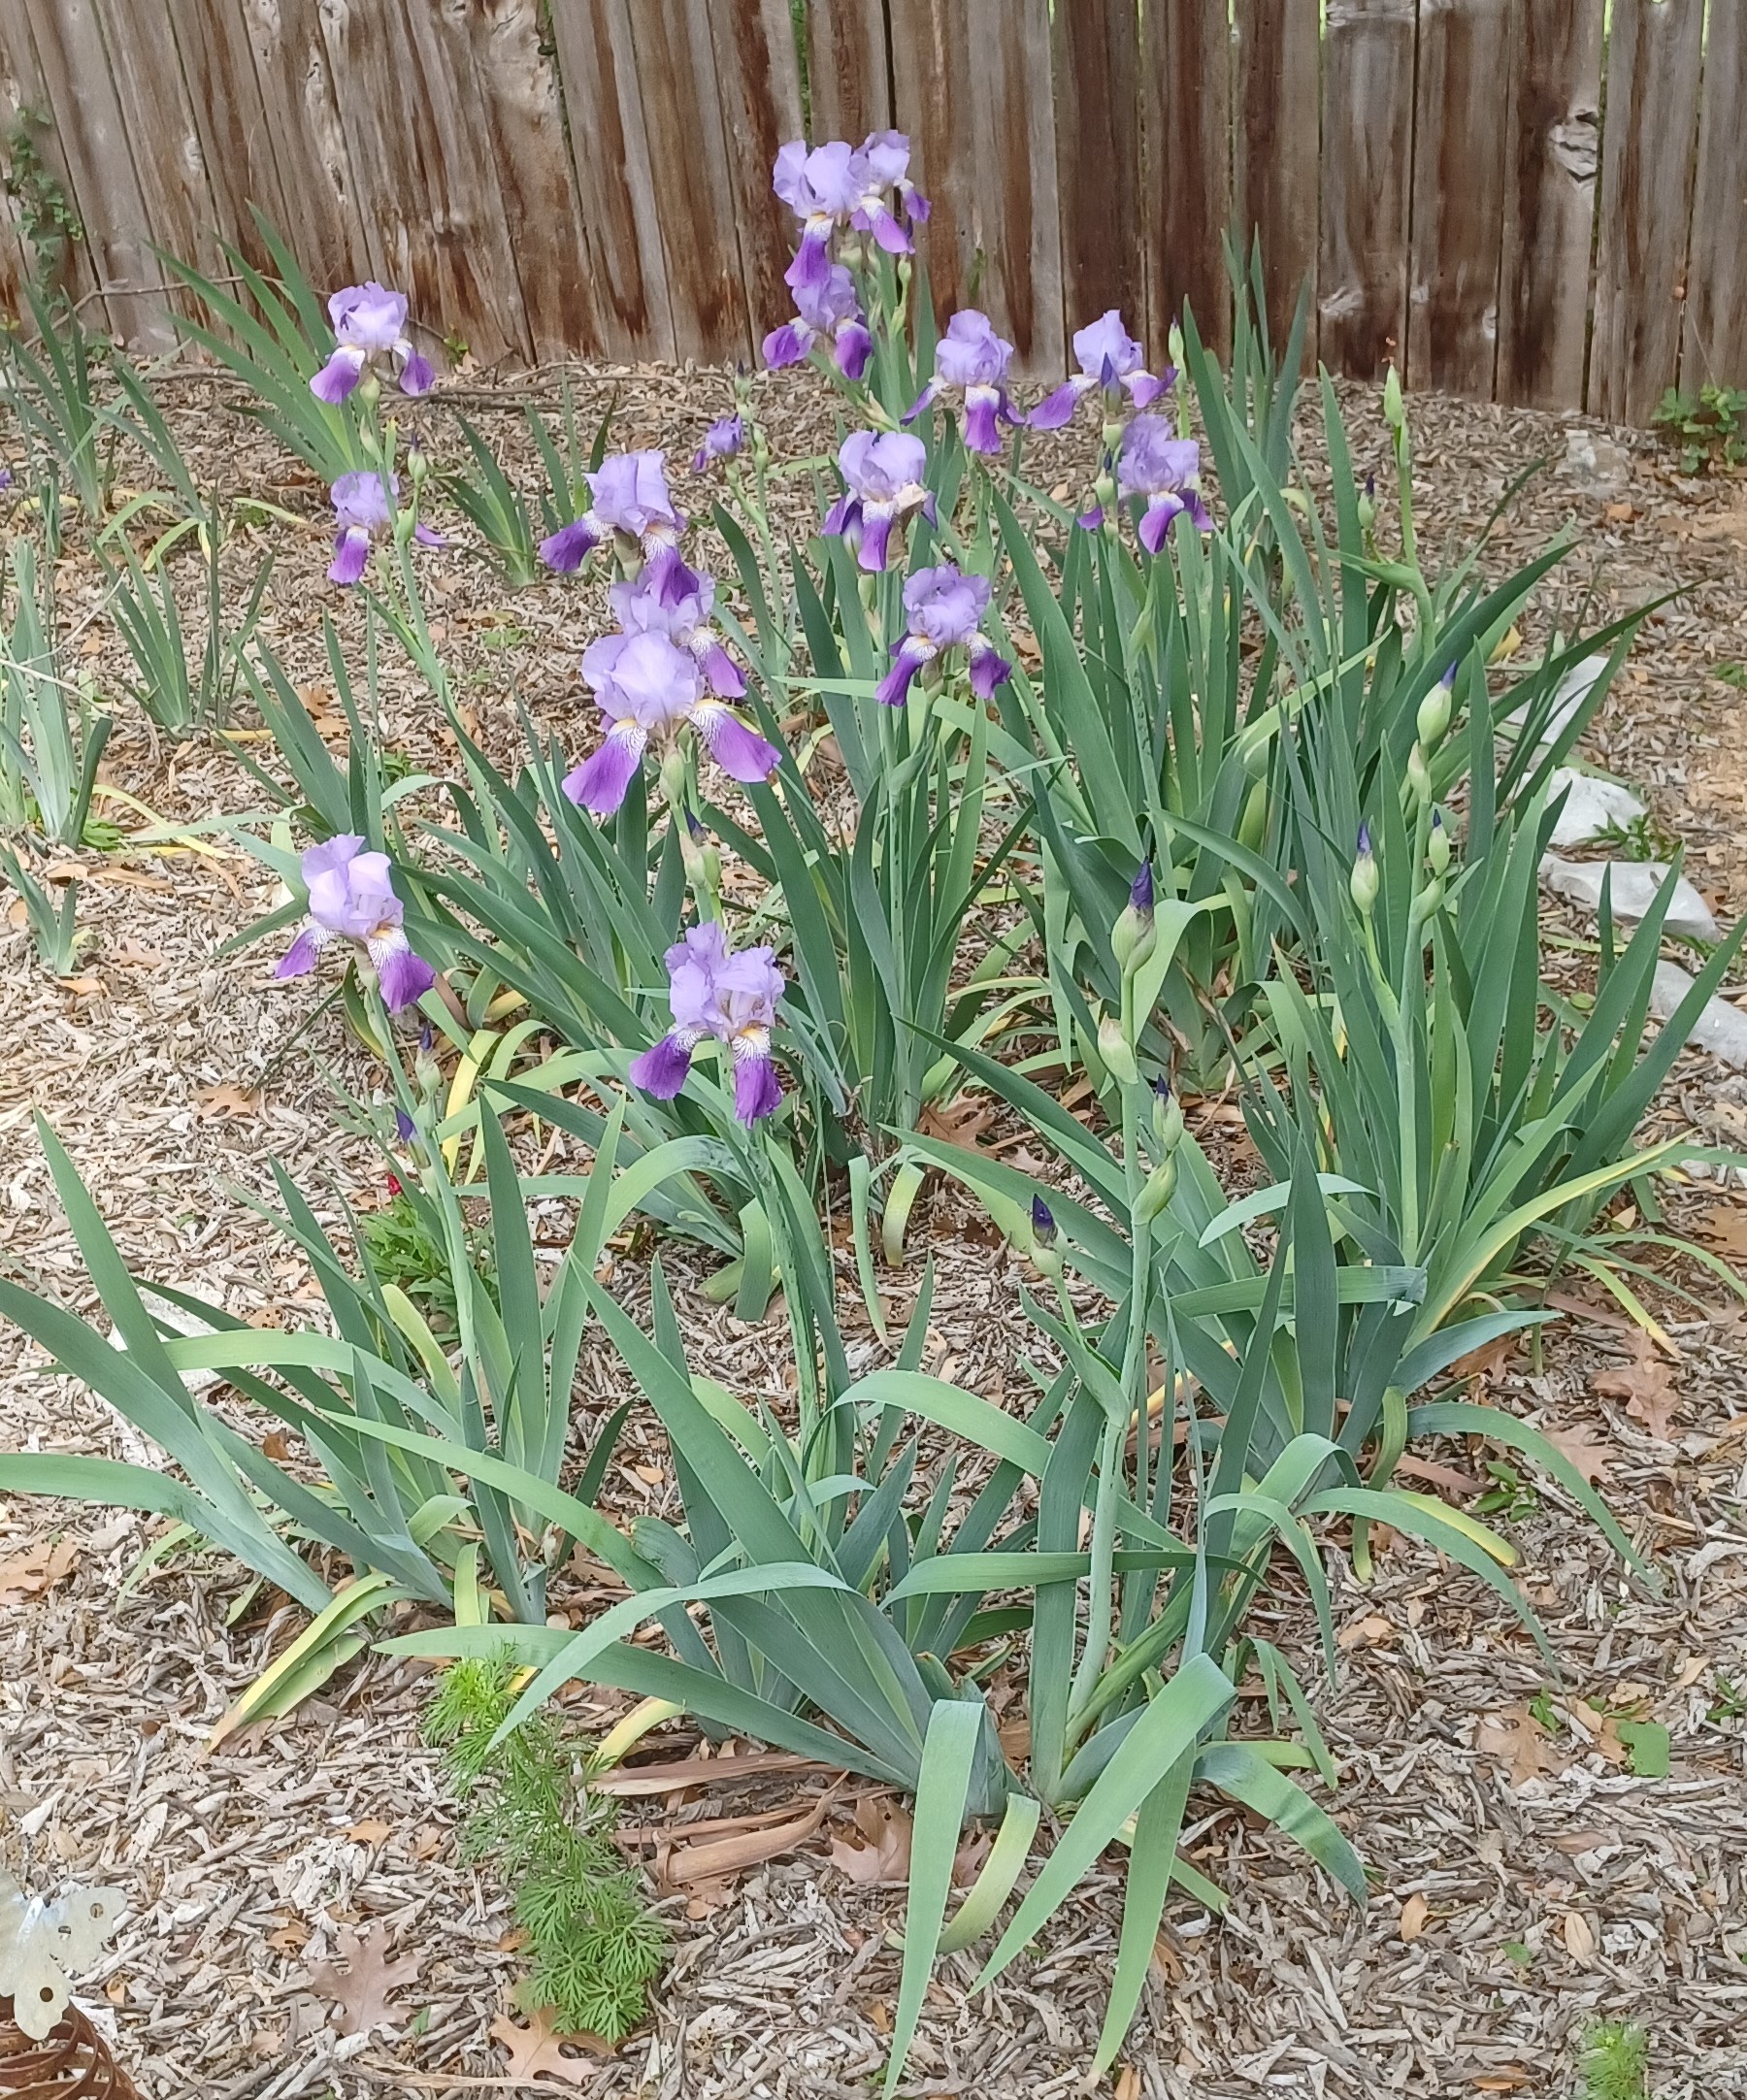 Featured image for “Growing Irises in San Antonio”